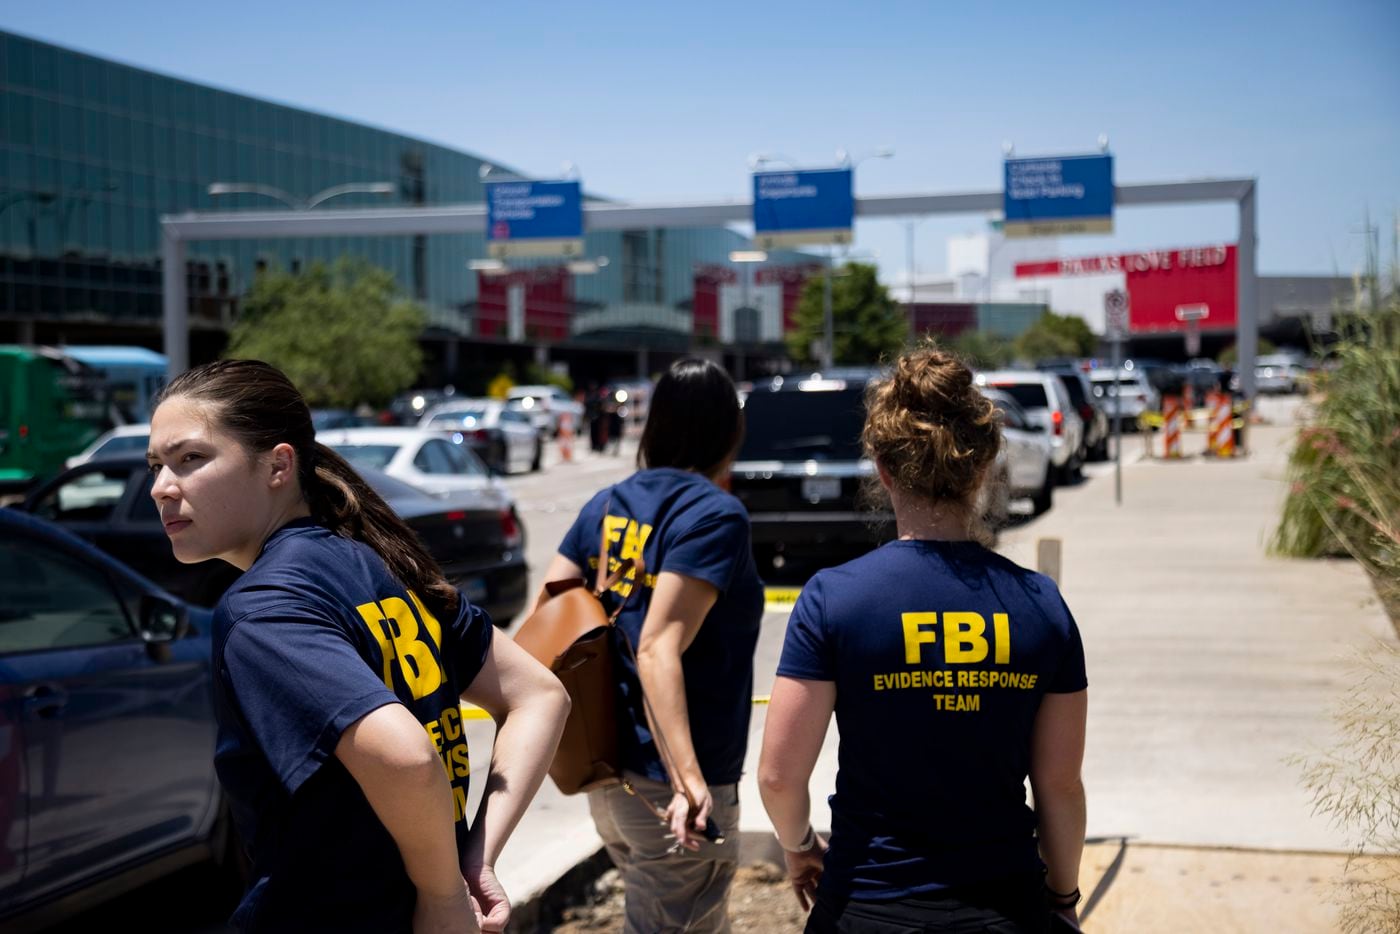 Members of the FBI Evidence Response Team arrive at the scene as Dallas police investigate...